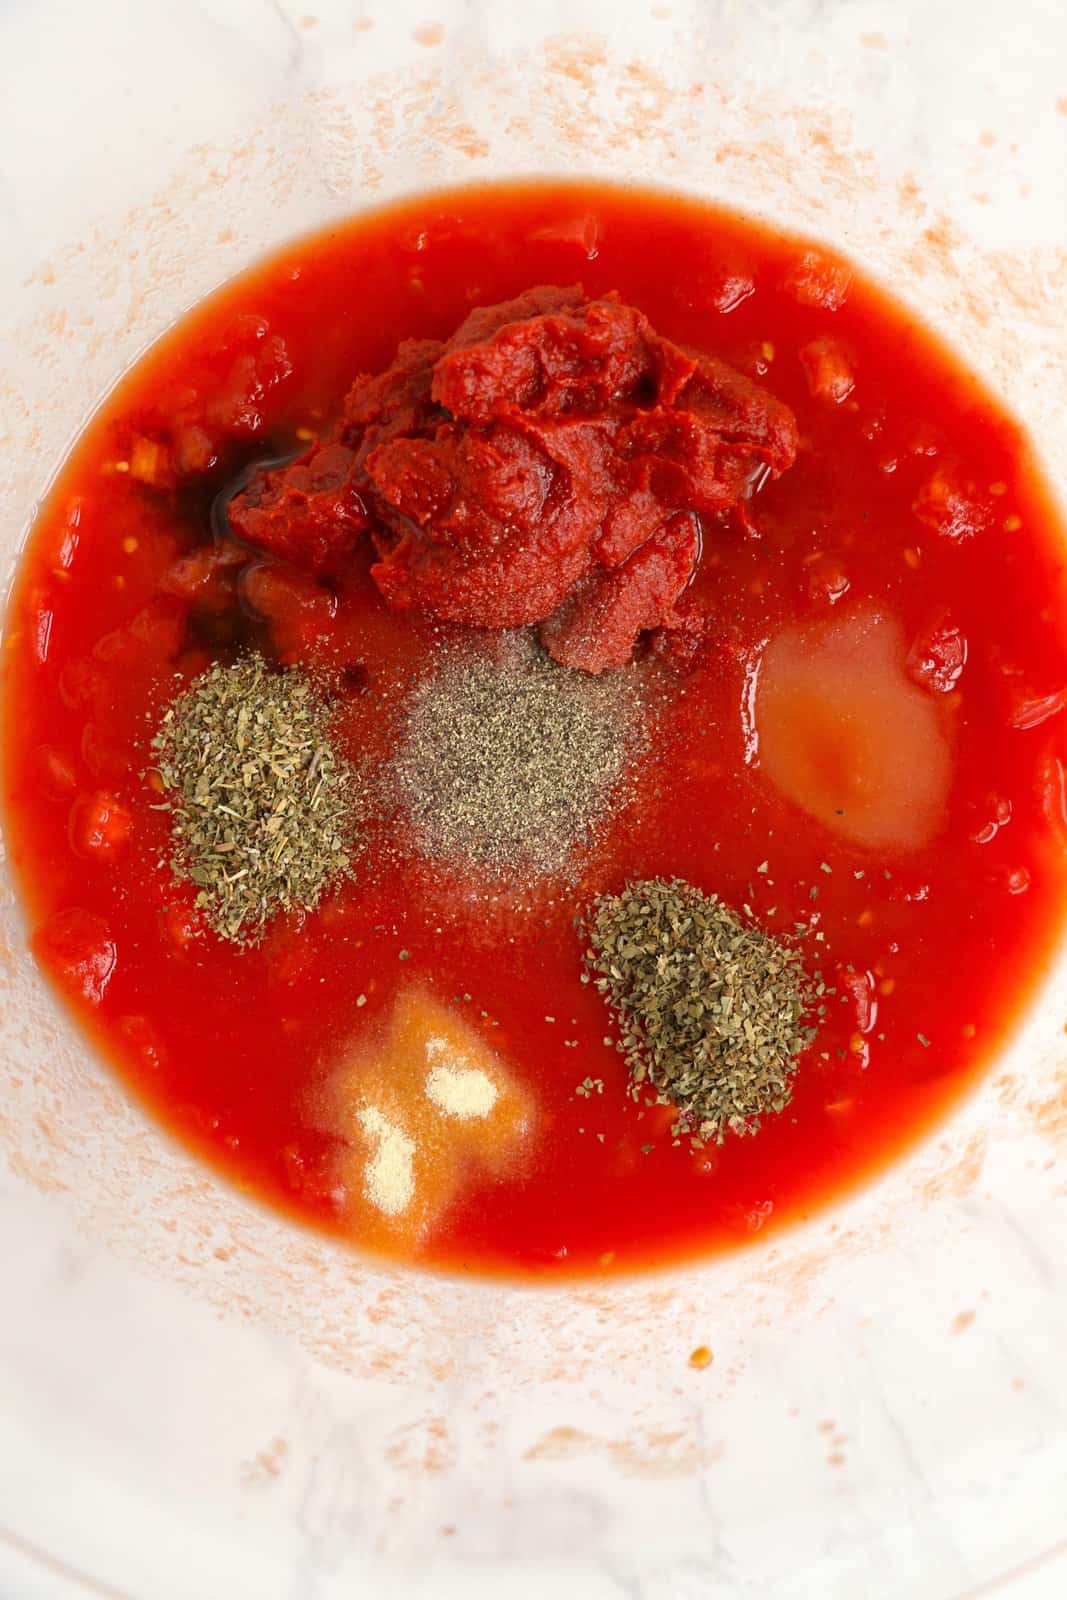 Tomatoes, tomato juice, tomato paste, sugar, worcestershire sauce, oregano, basil, garlic powder, salt, and pepper added to bowl.